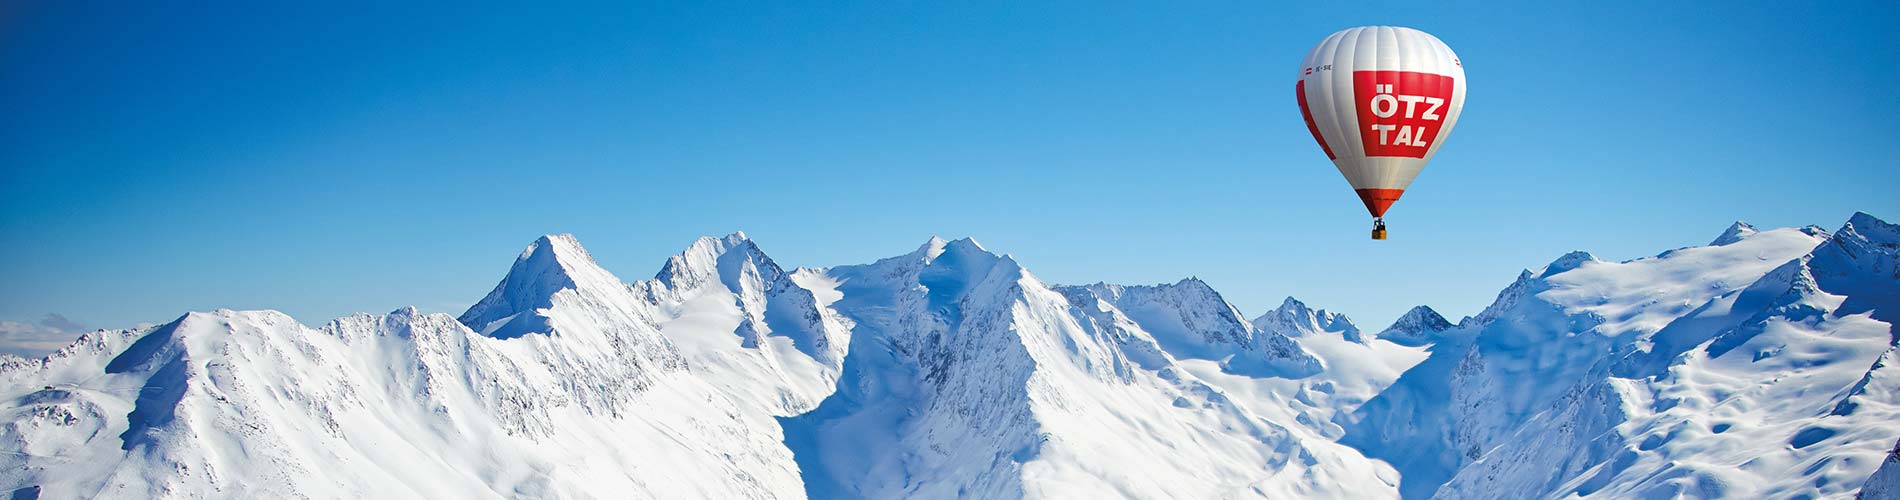 Ski pass news for Skiing holiday in Obergurgl-Hochgurgl and Sölden Tyrol Austria